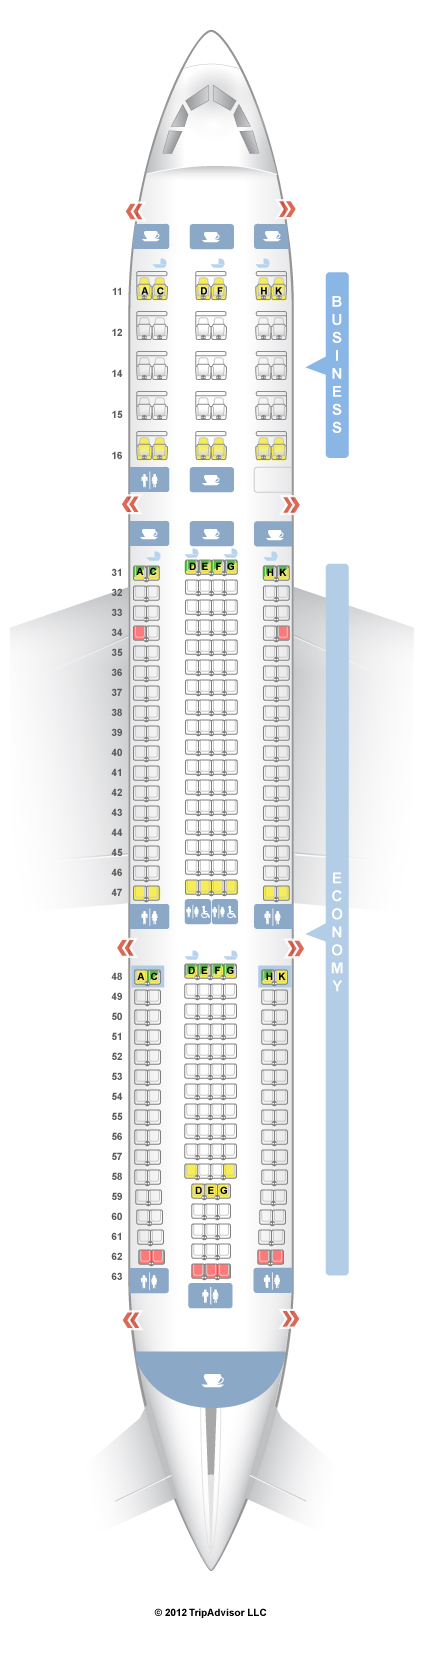 SIA A330 Seat Layout